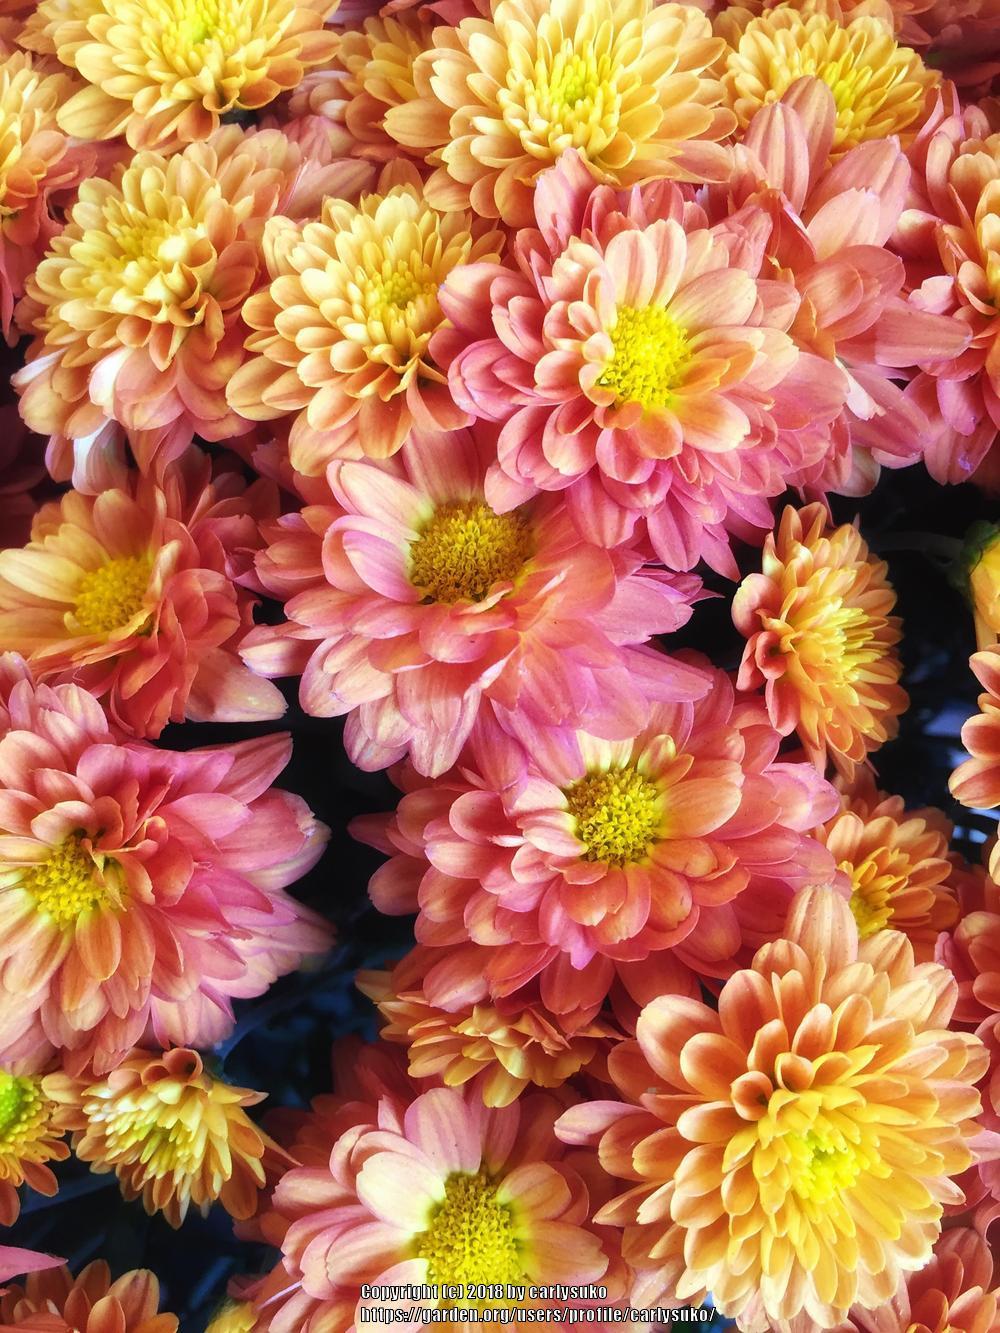 Photo of Chrysanthemum uploaded by carlysuko